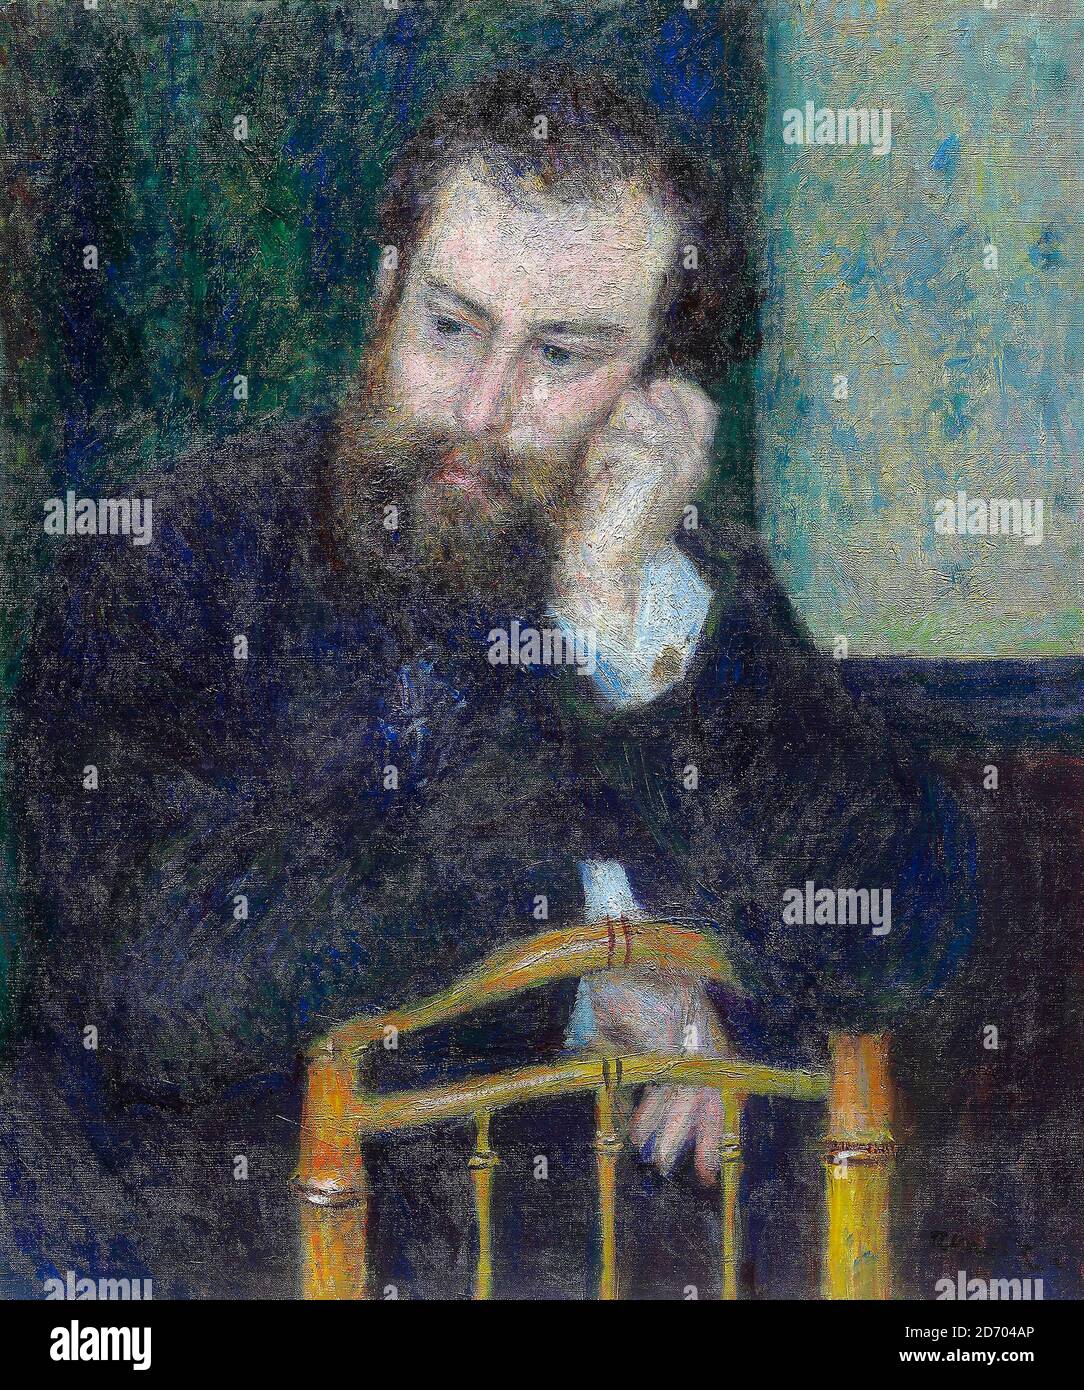 Pierre Auguste Renoir, Alfred Sisley (1839-1899), British Impressionist Landscape Painter, portrait painting, 1876 Stock Photo